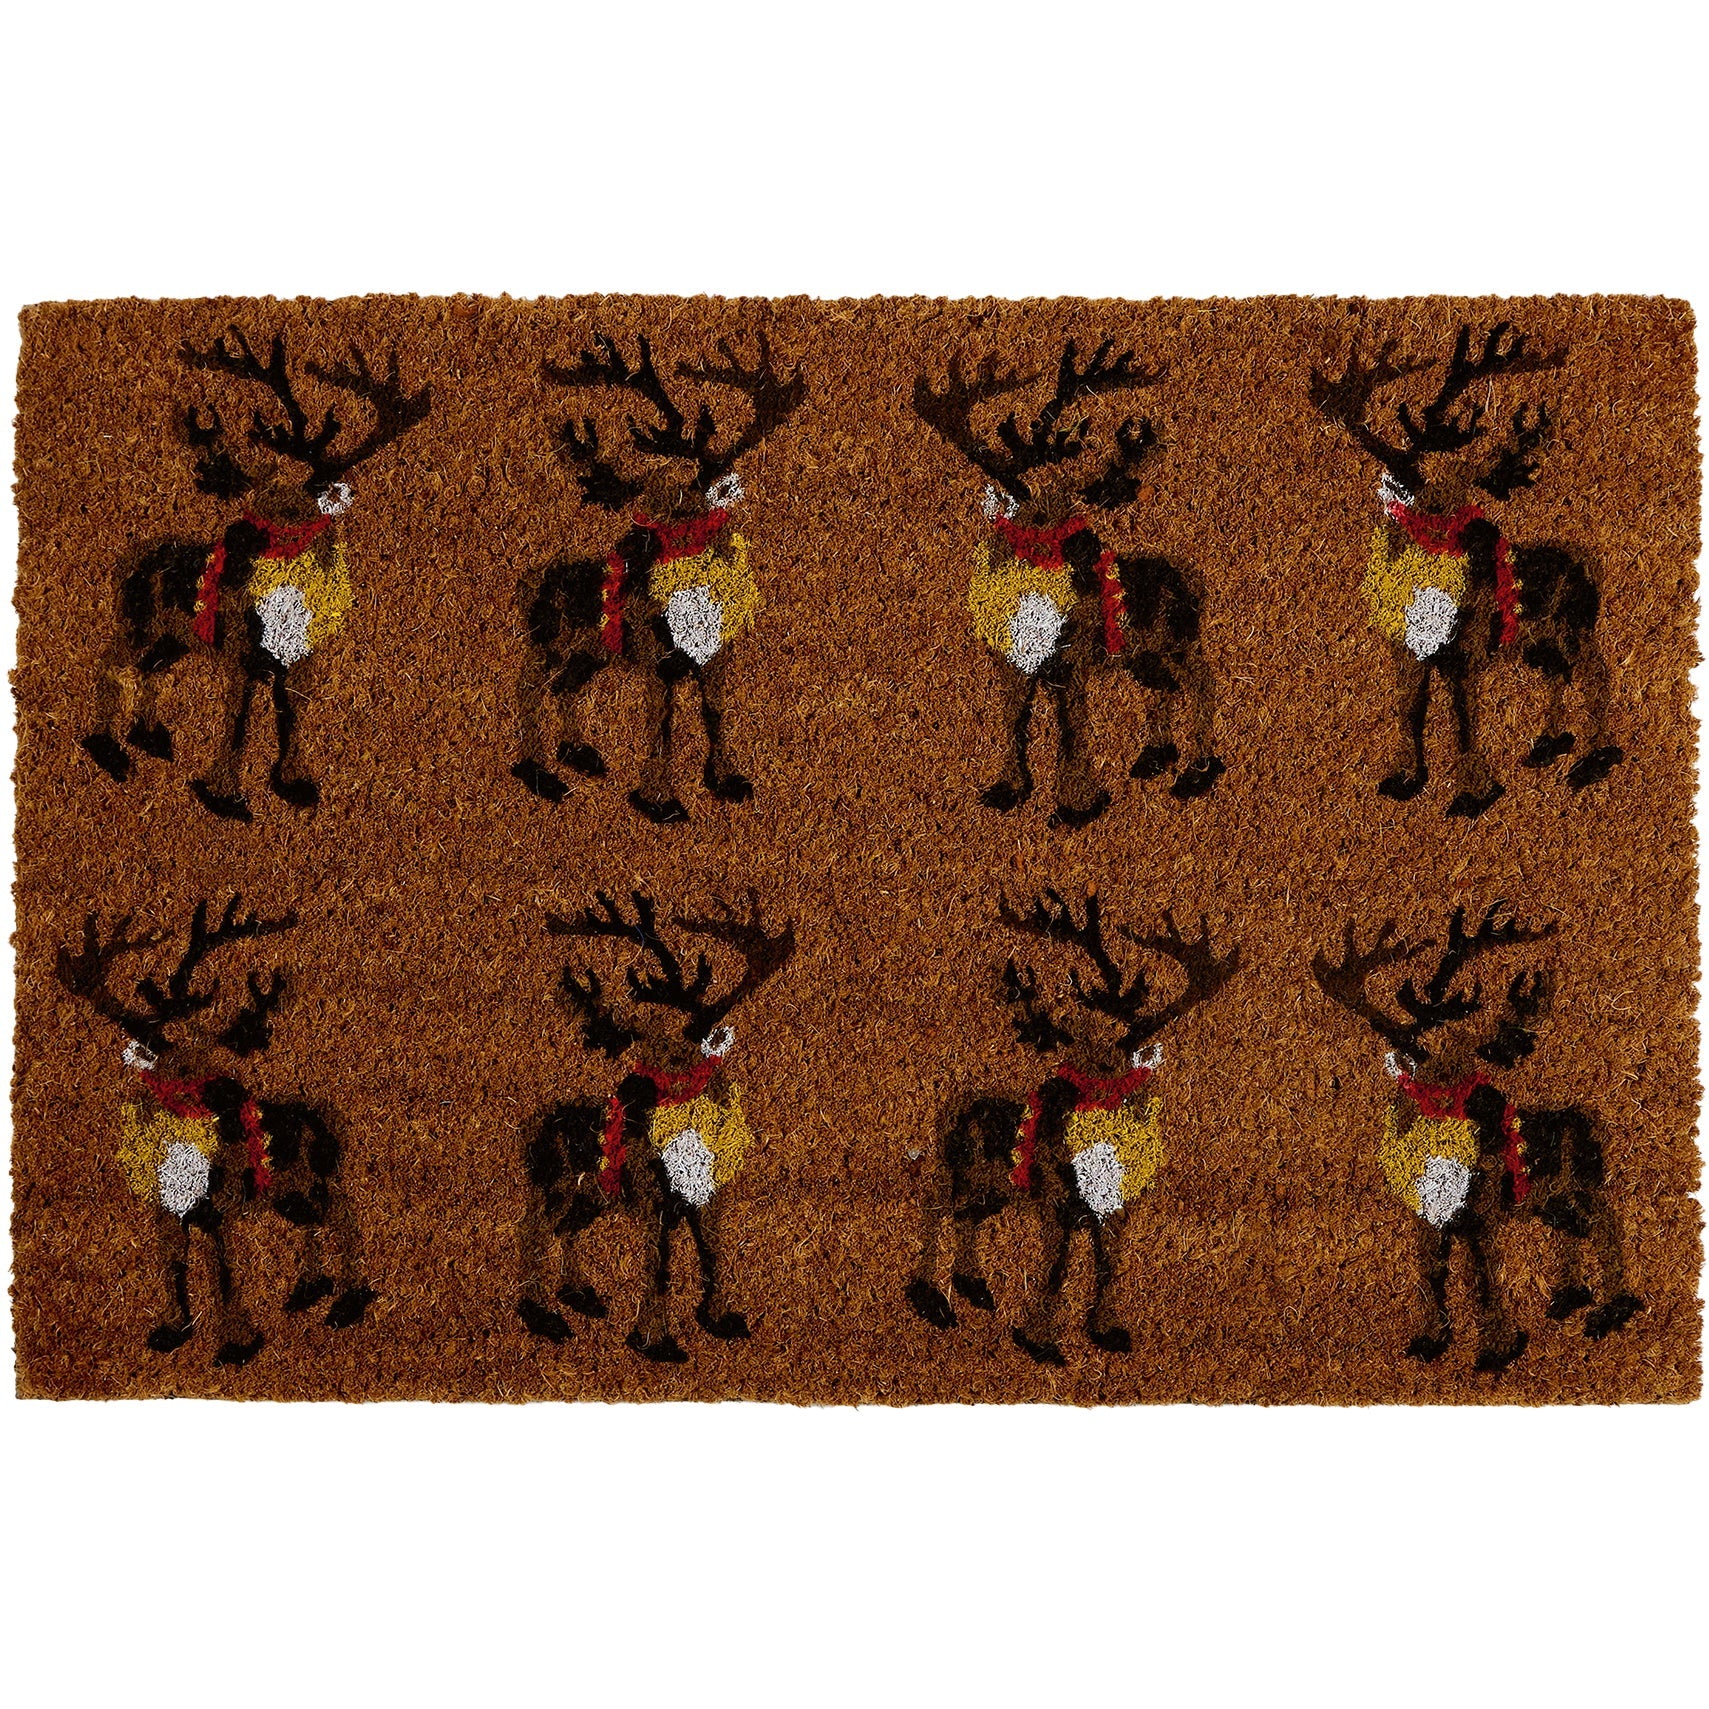 Accents AC211245 Coir Door Mat 40x60cm Reindeers Christmas - Various Designs - Premium Doormats from Premier Decorations - Just $9.95! Shop now at W Hurst & Son (IW) Ltd